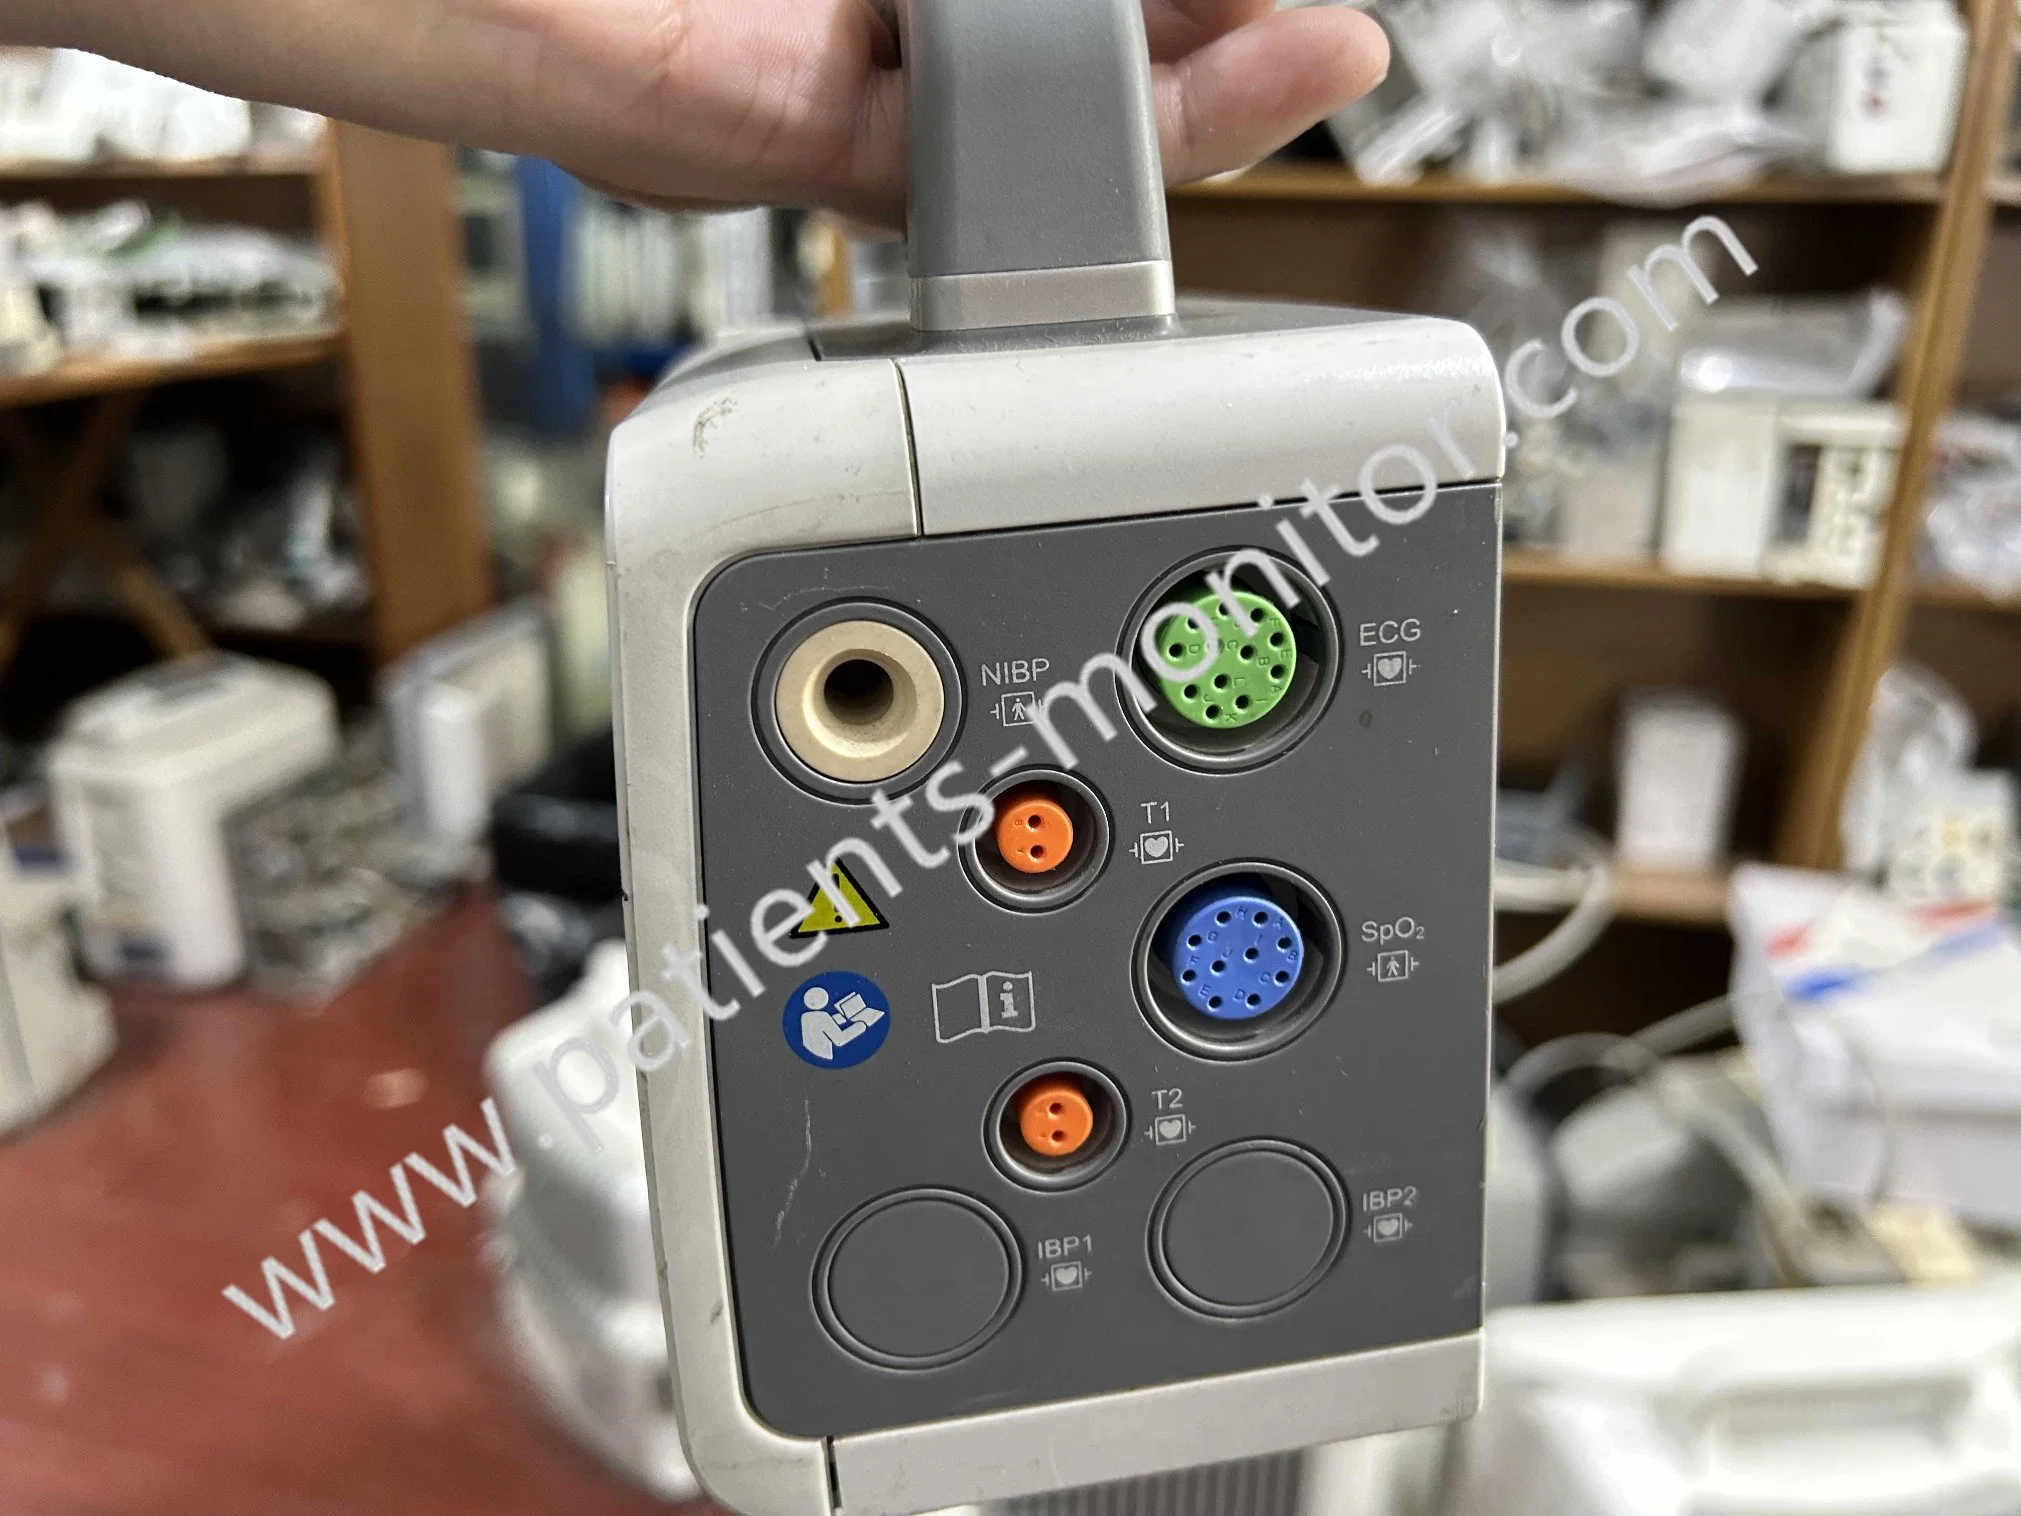 Edan Im20 Modular Patient Monitor Used Repair Medical Equipment for Hospital, Clinic